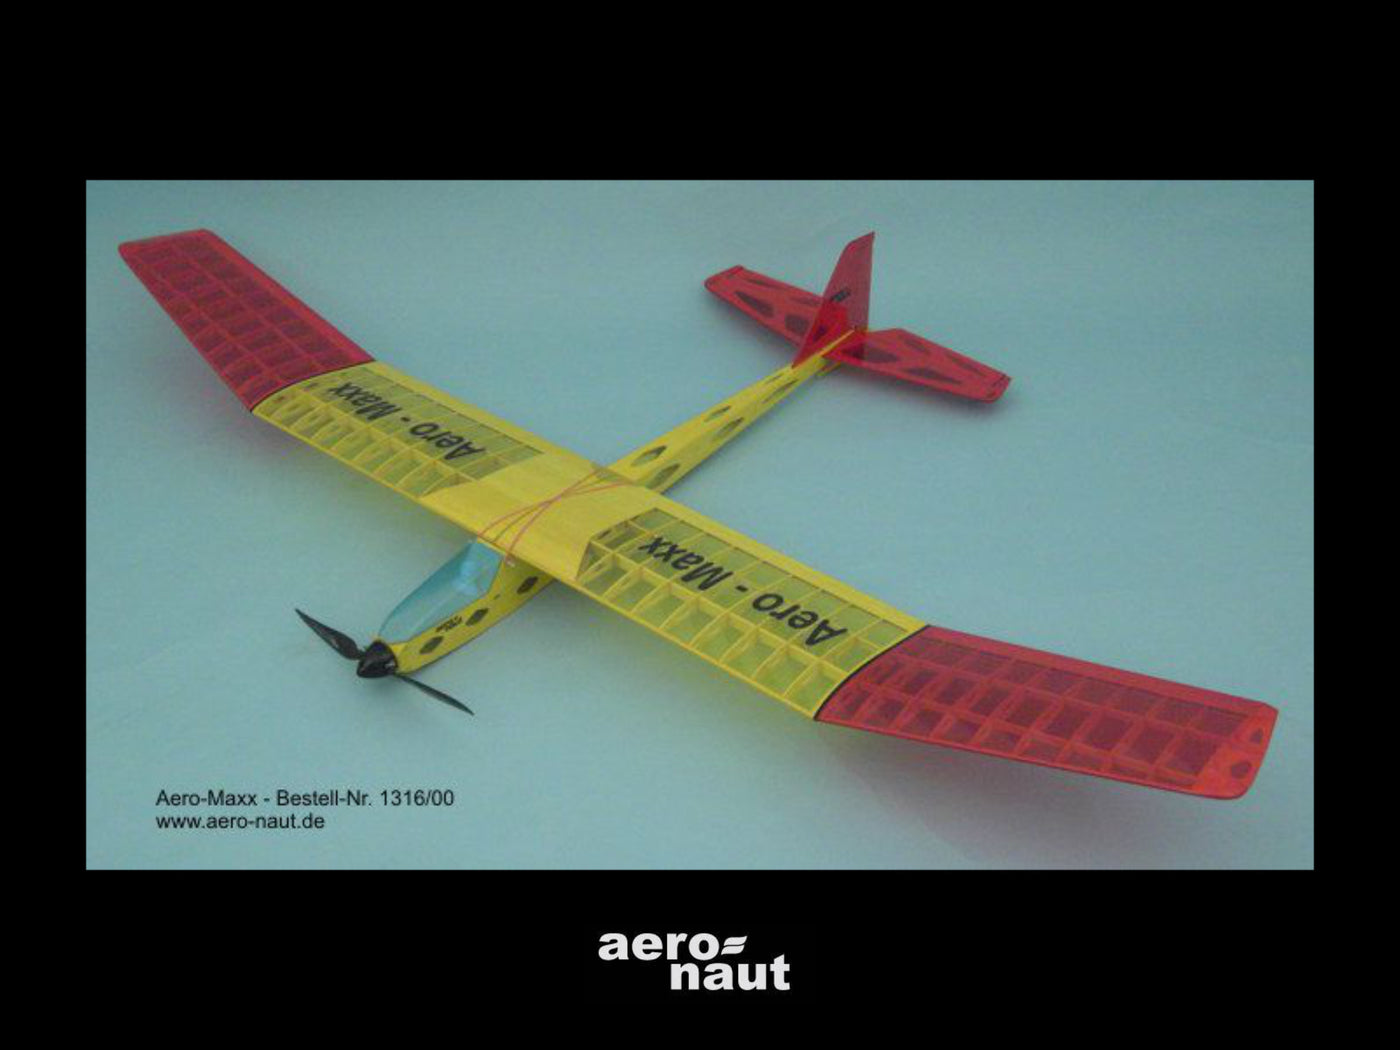 The Aero-Maxx 1.8 meter Electric Glider by Aero-naut